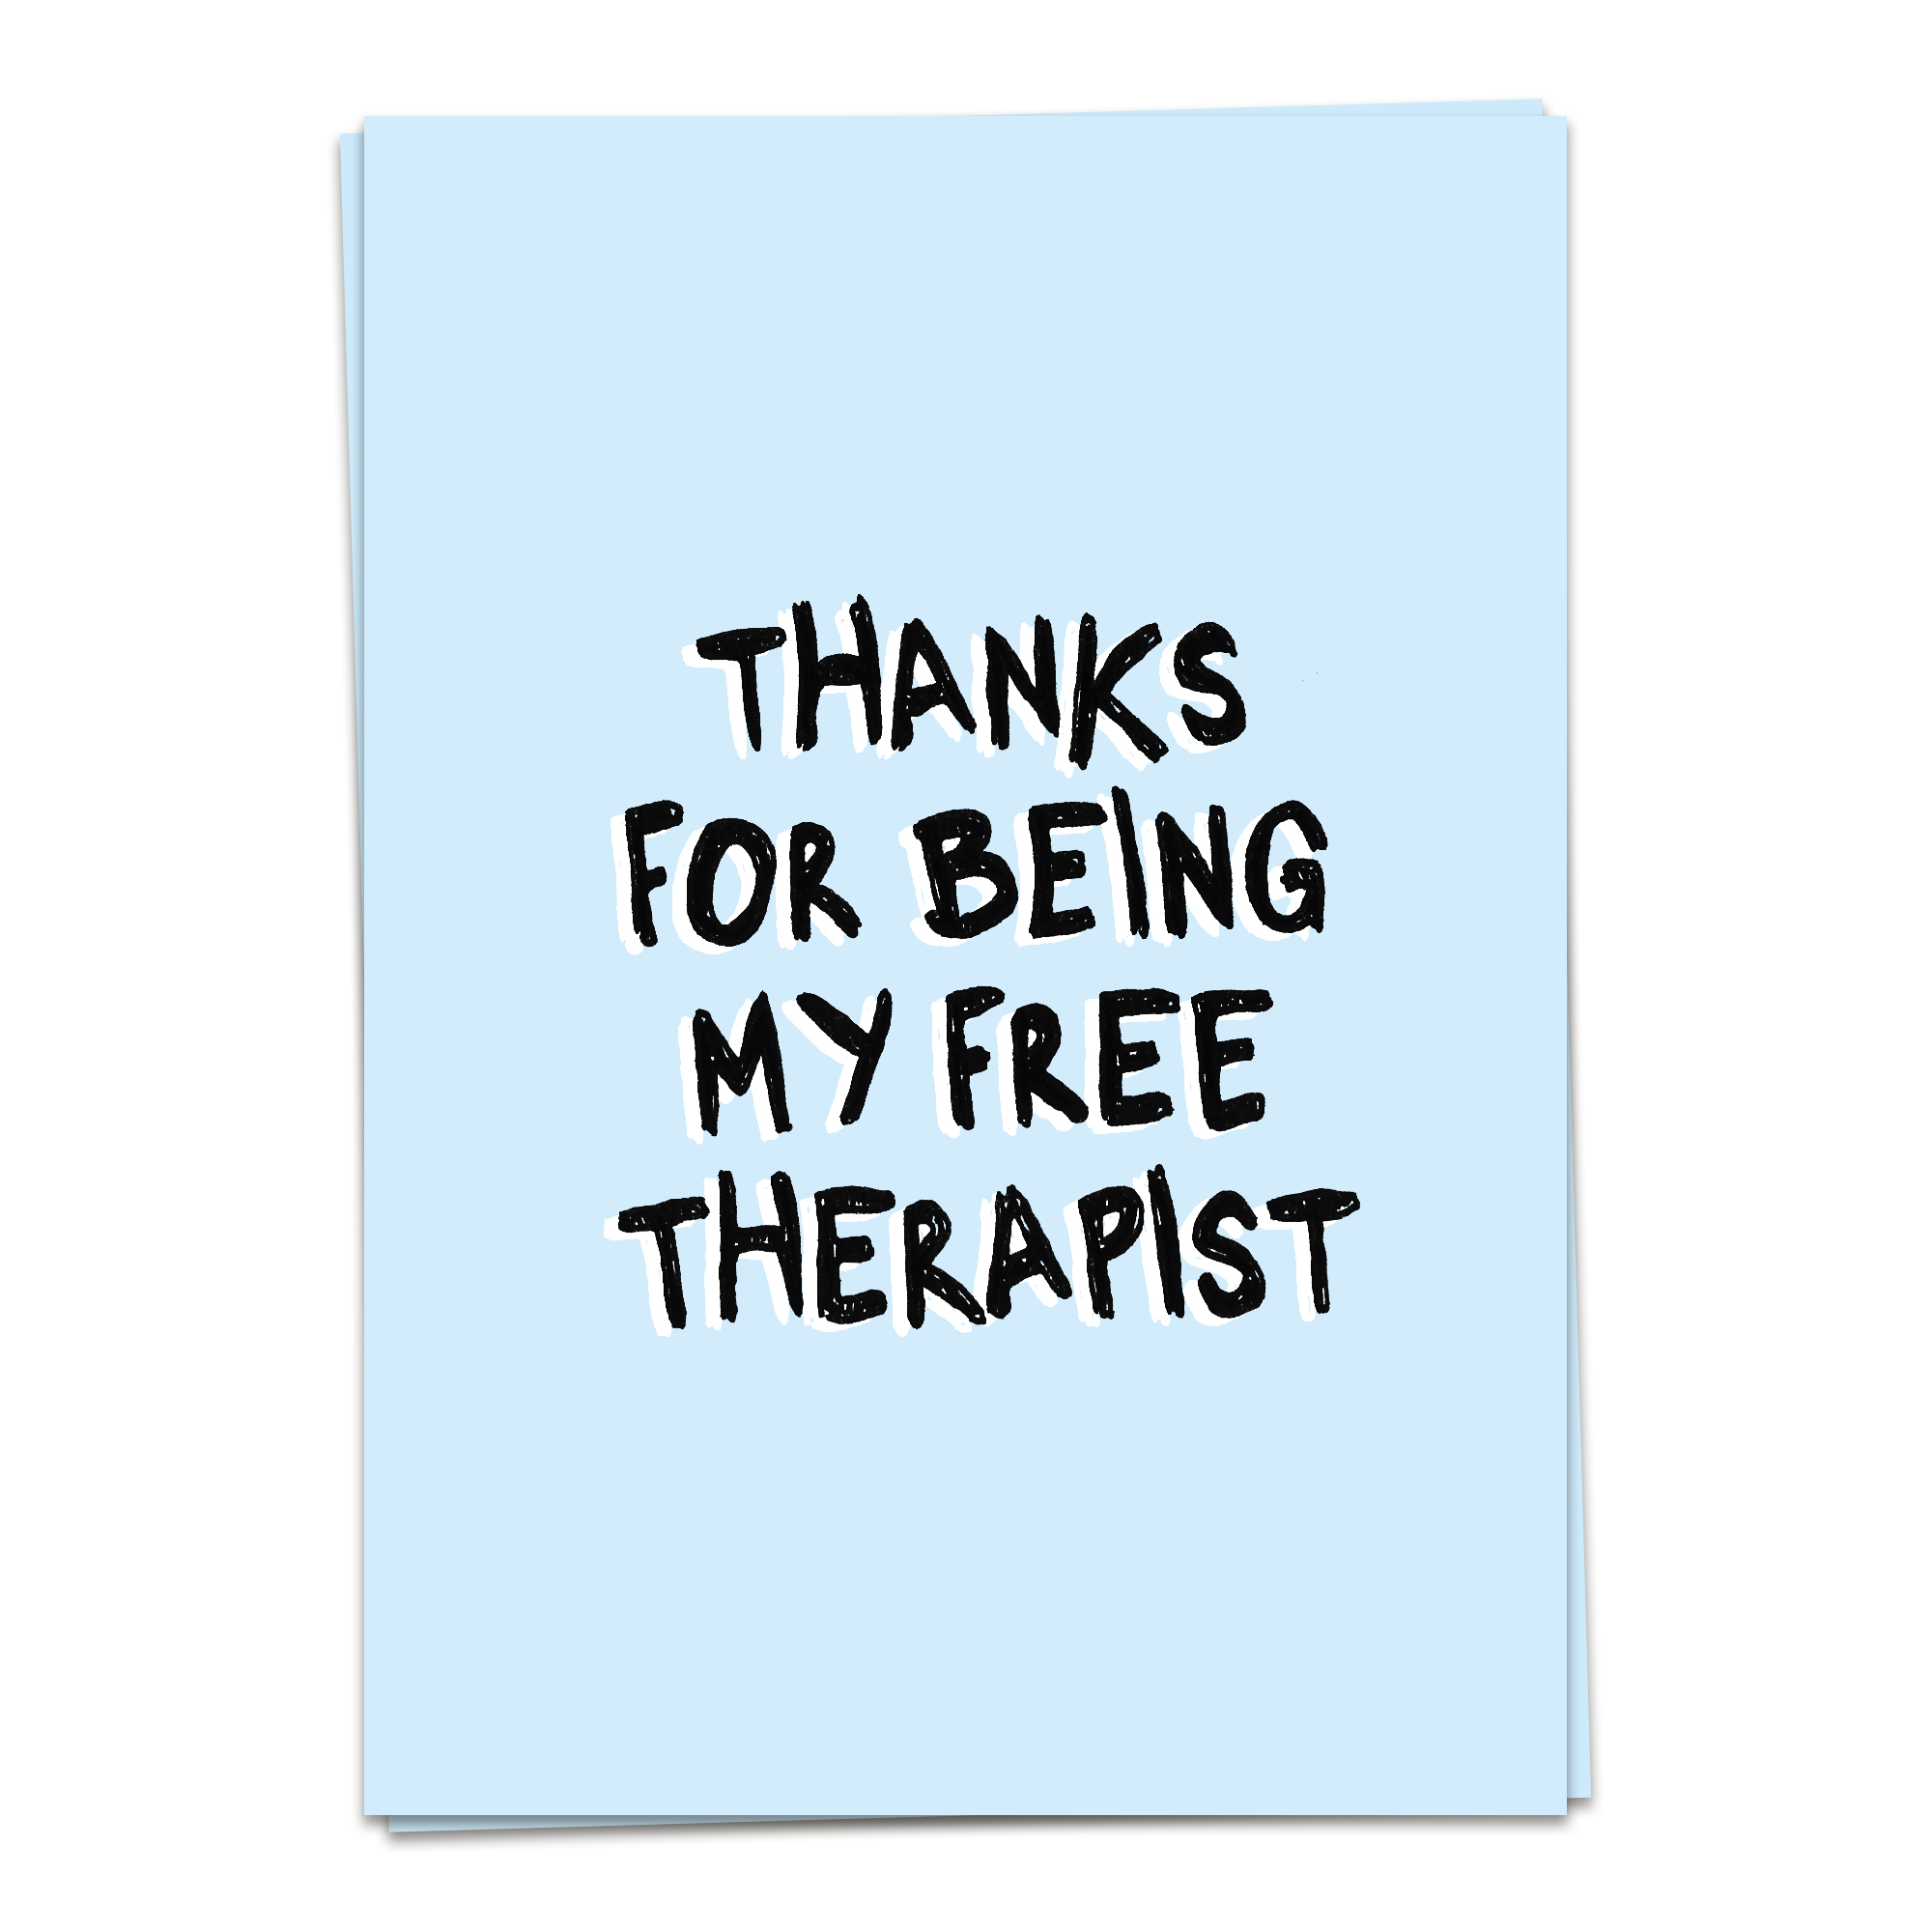 BFF - Free therapist